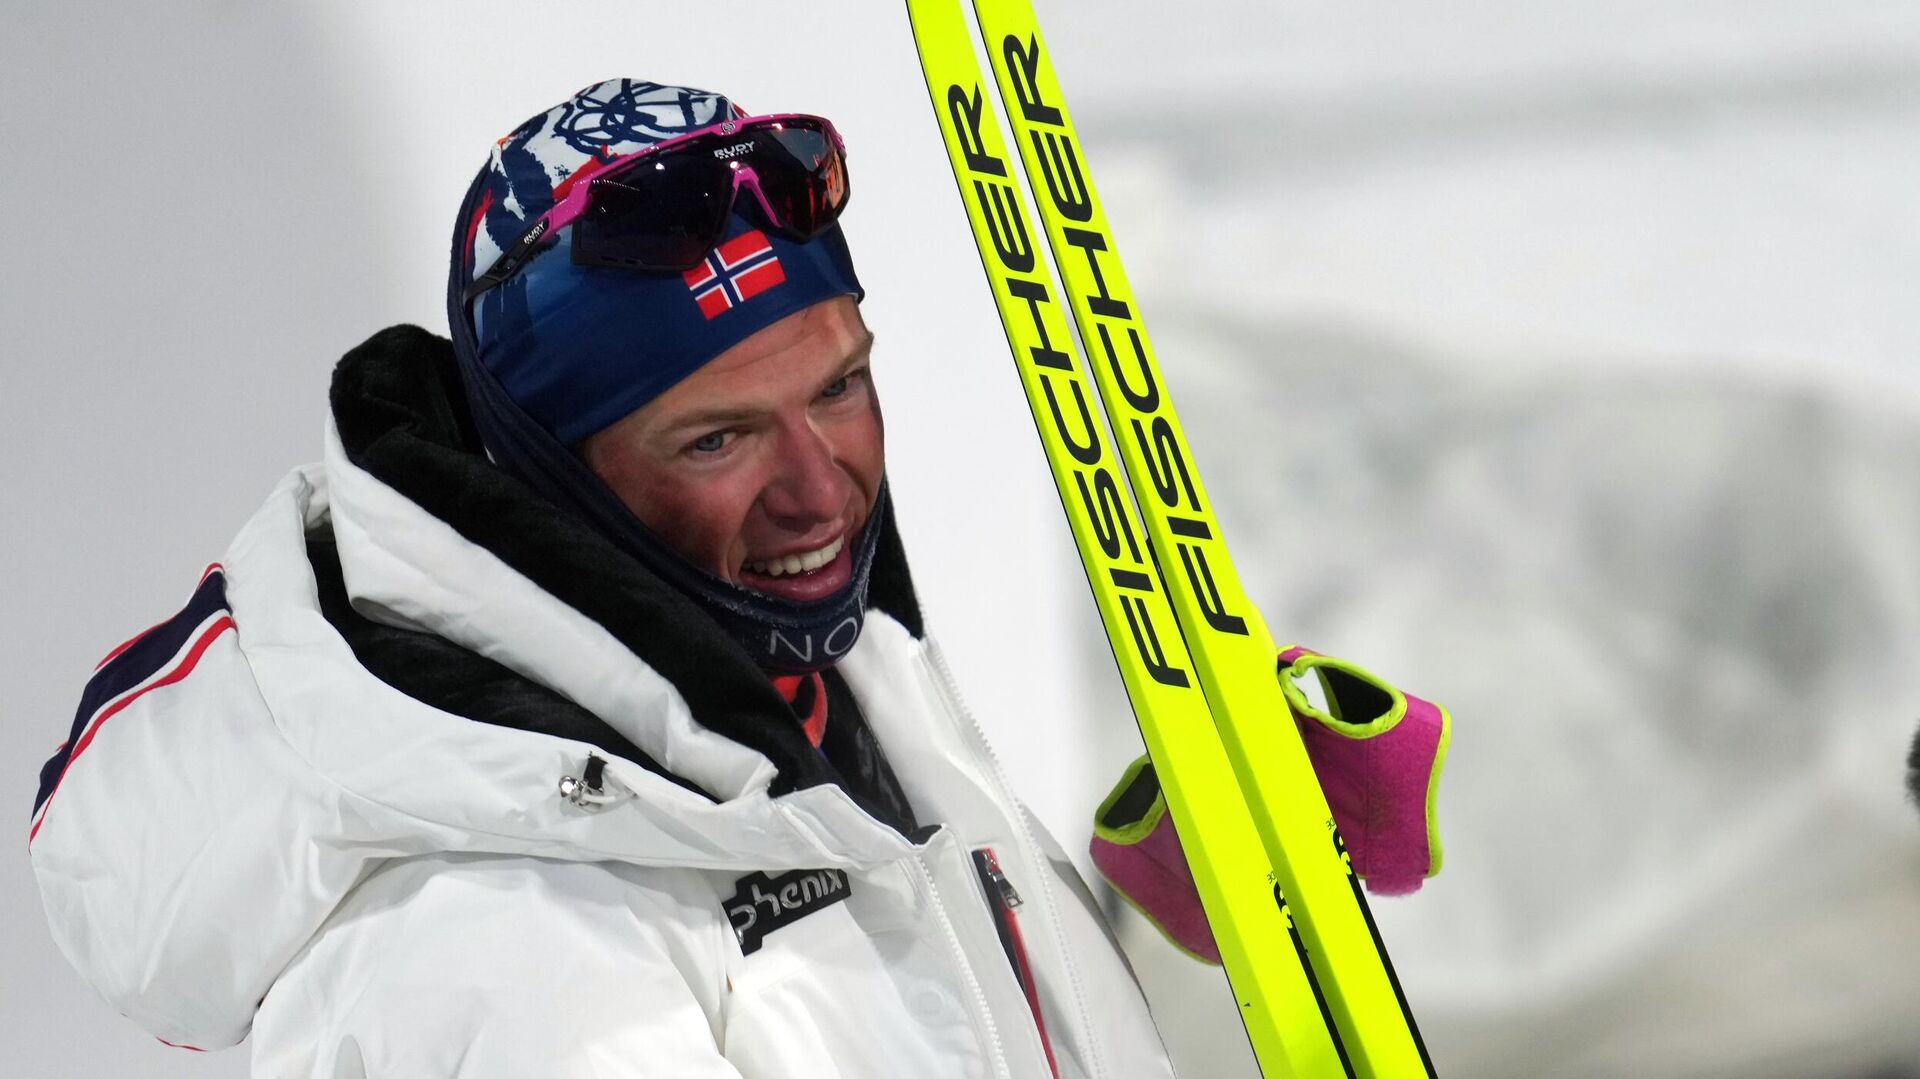 Норвежский лыжник Йоханнес Хёсфлот Клебо на финише дистанции командного спринта среди мужчин на Олимпиаде-2022 - Sputnik Литва, 1920, 19.02.2022